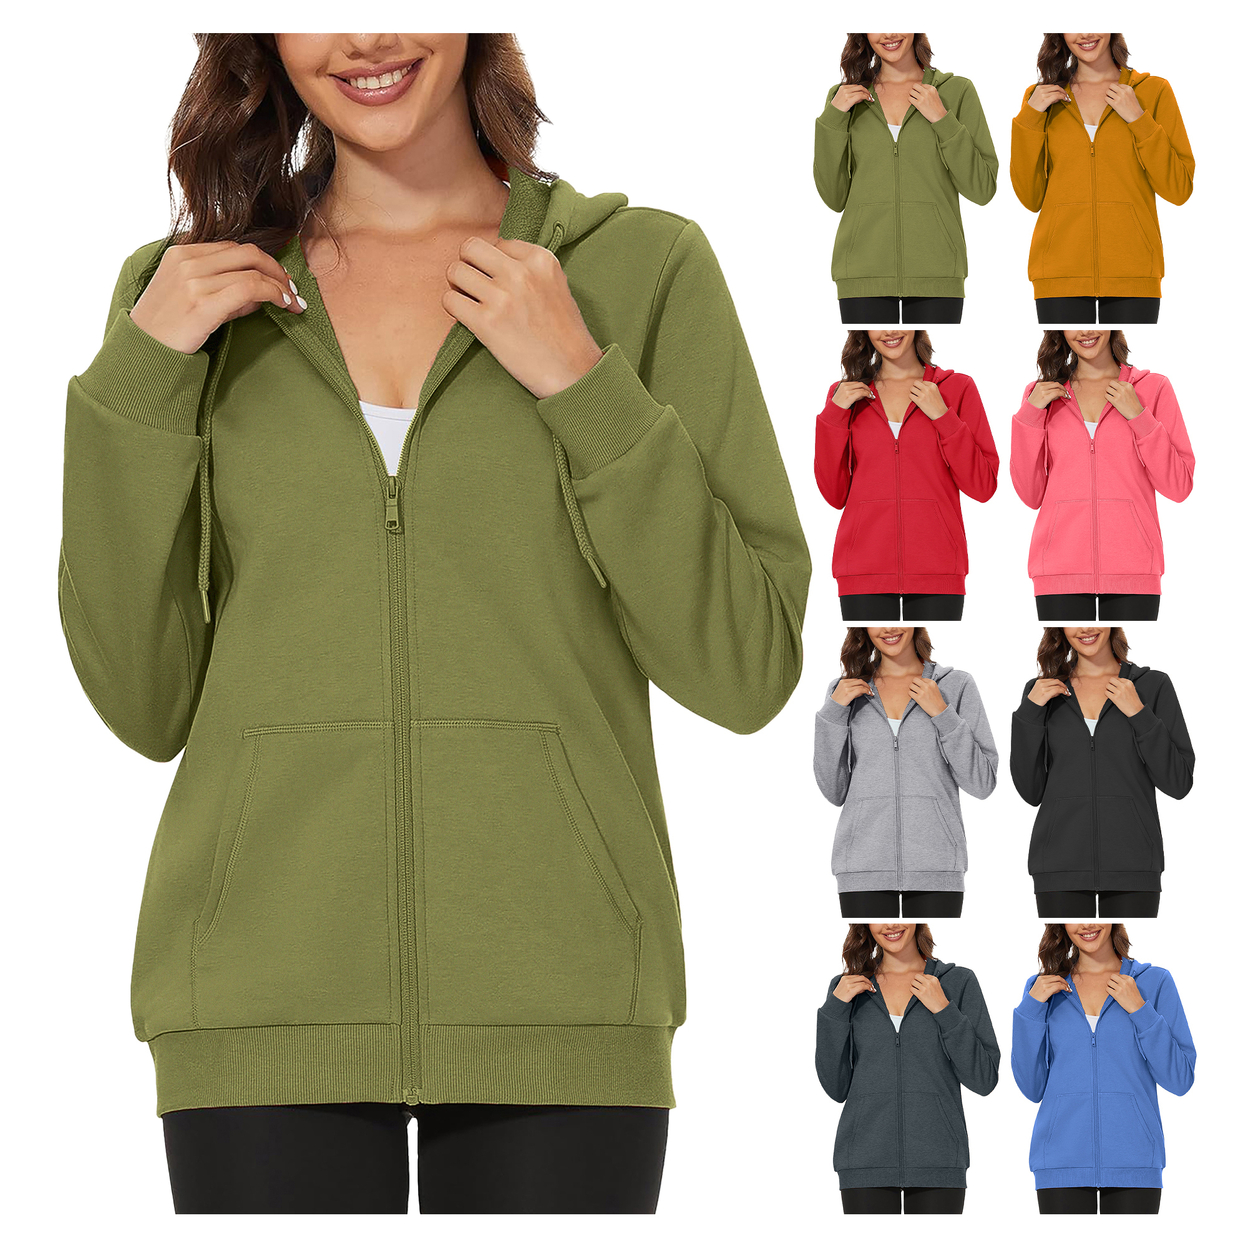 2-Pack: Women's Winter Warm Soft Blend Fleece Lined Full Zip Up Hoodie - Black & Black, Large